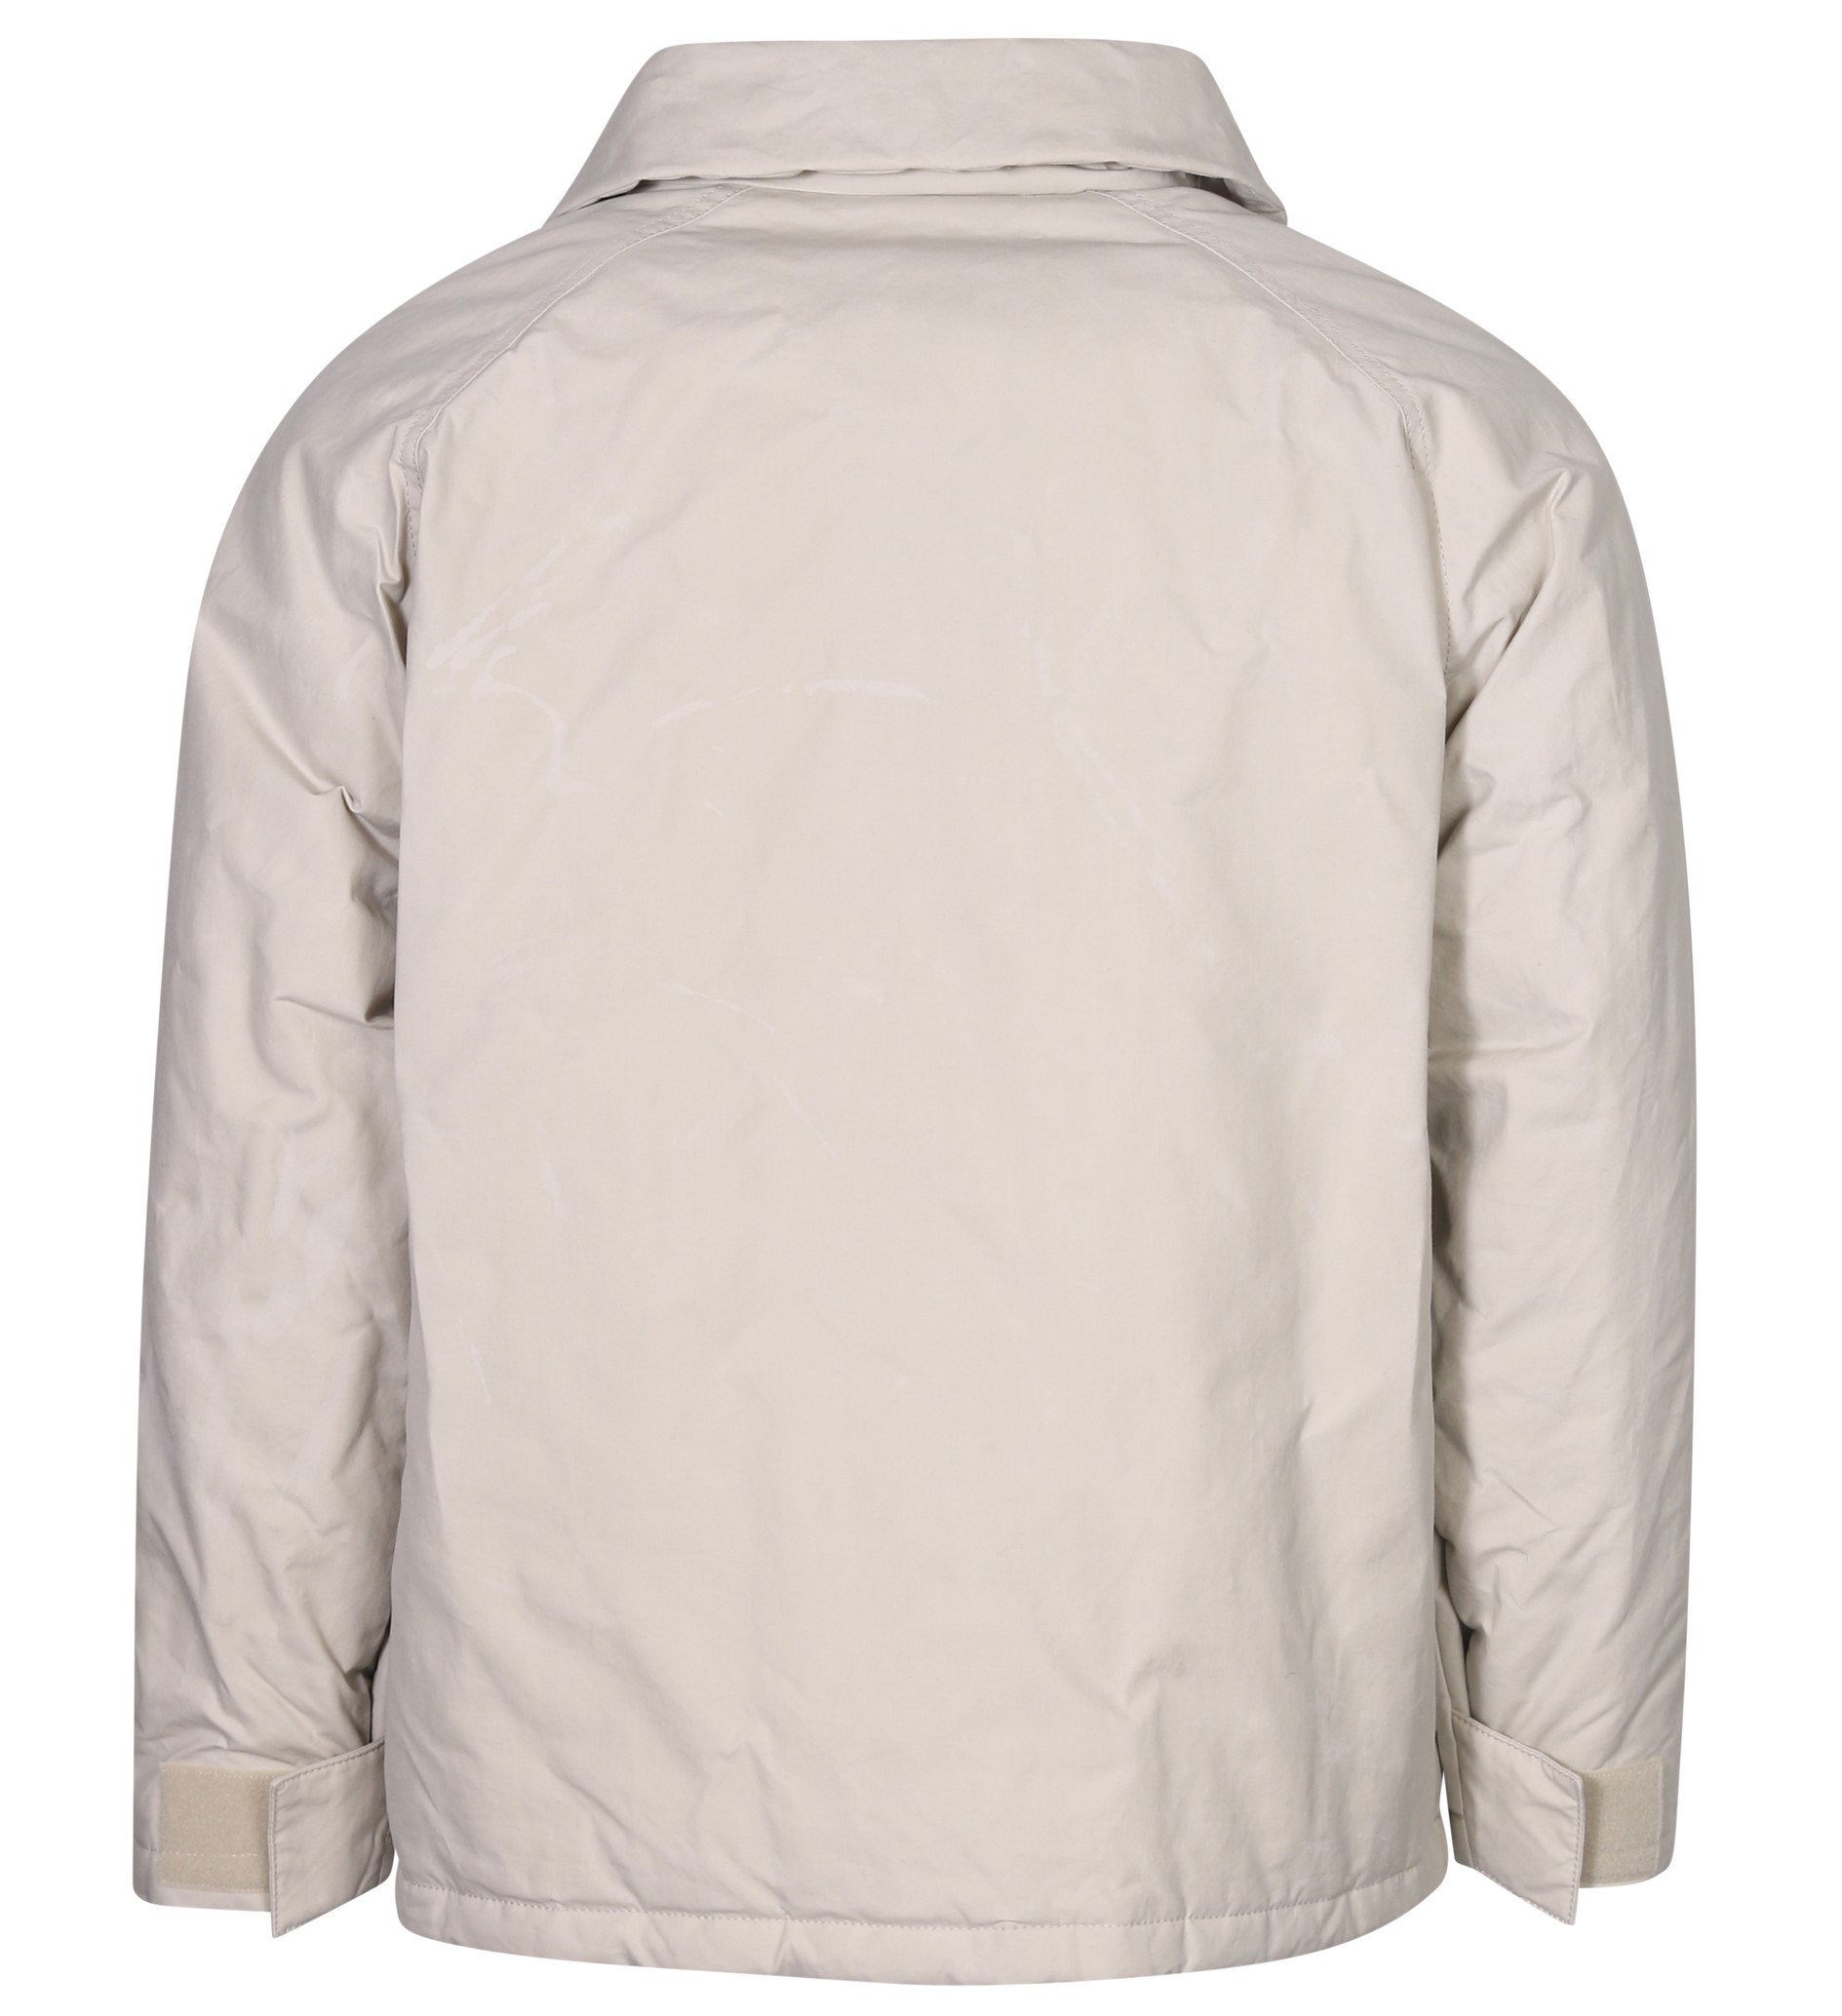 ASPESI Soft Padded Cotton Jacket in Beige